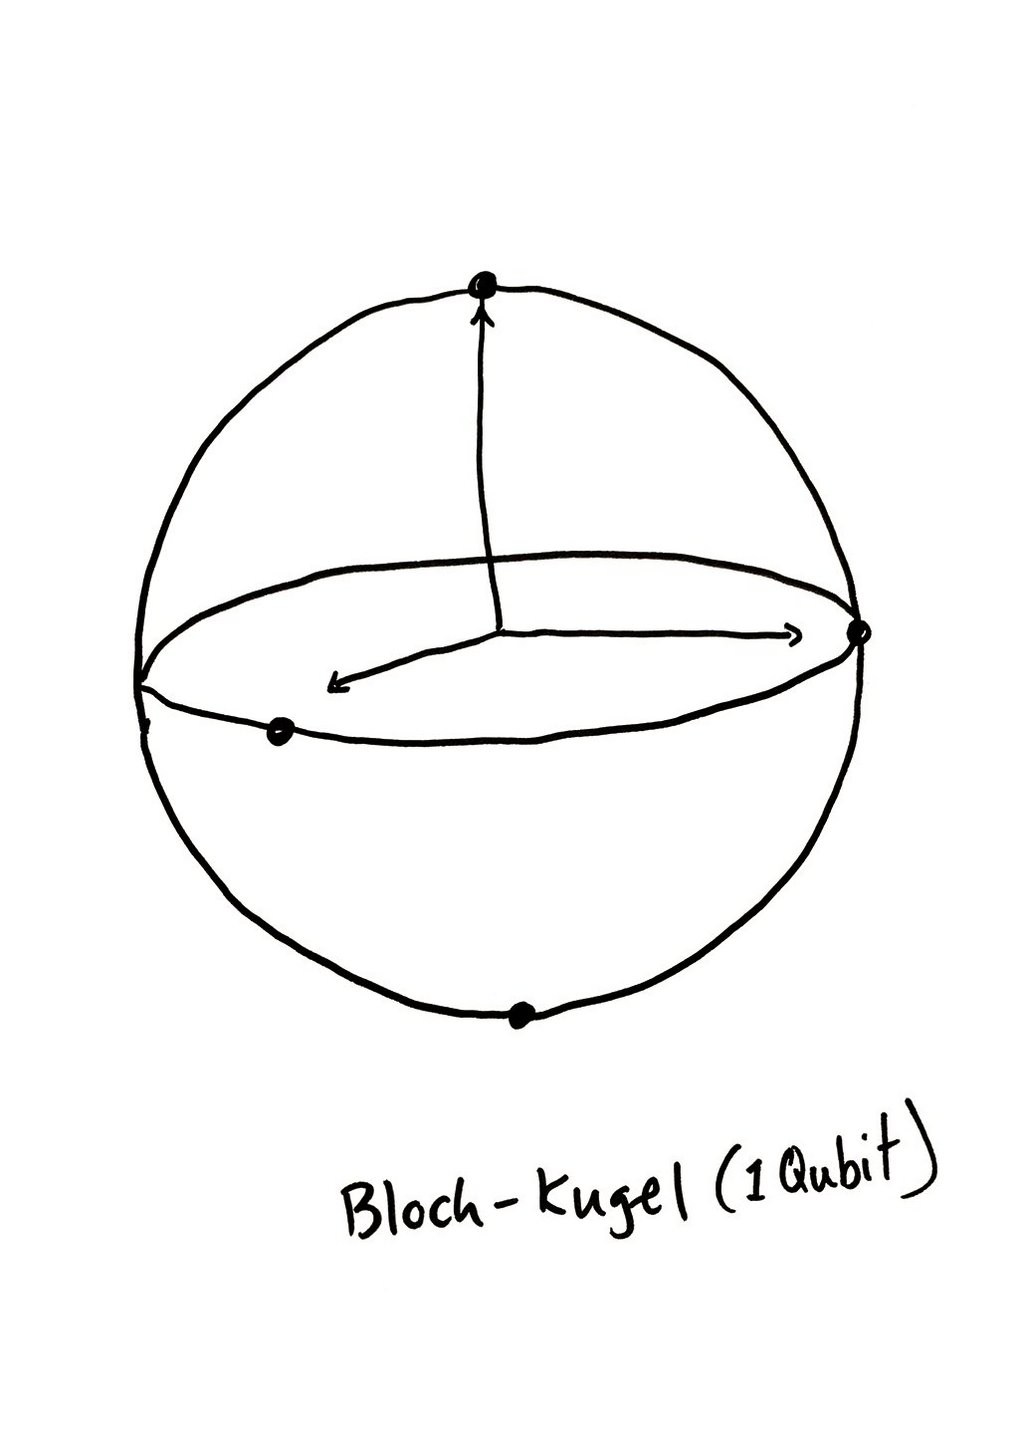 Geometric drawing of a block sphere representing a qubit.